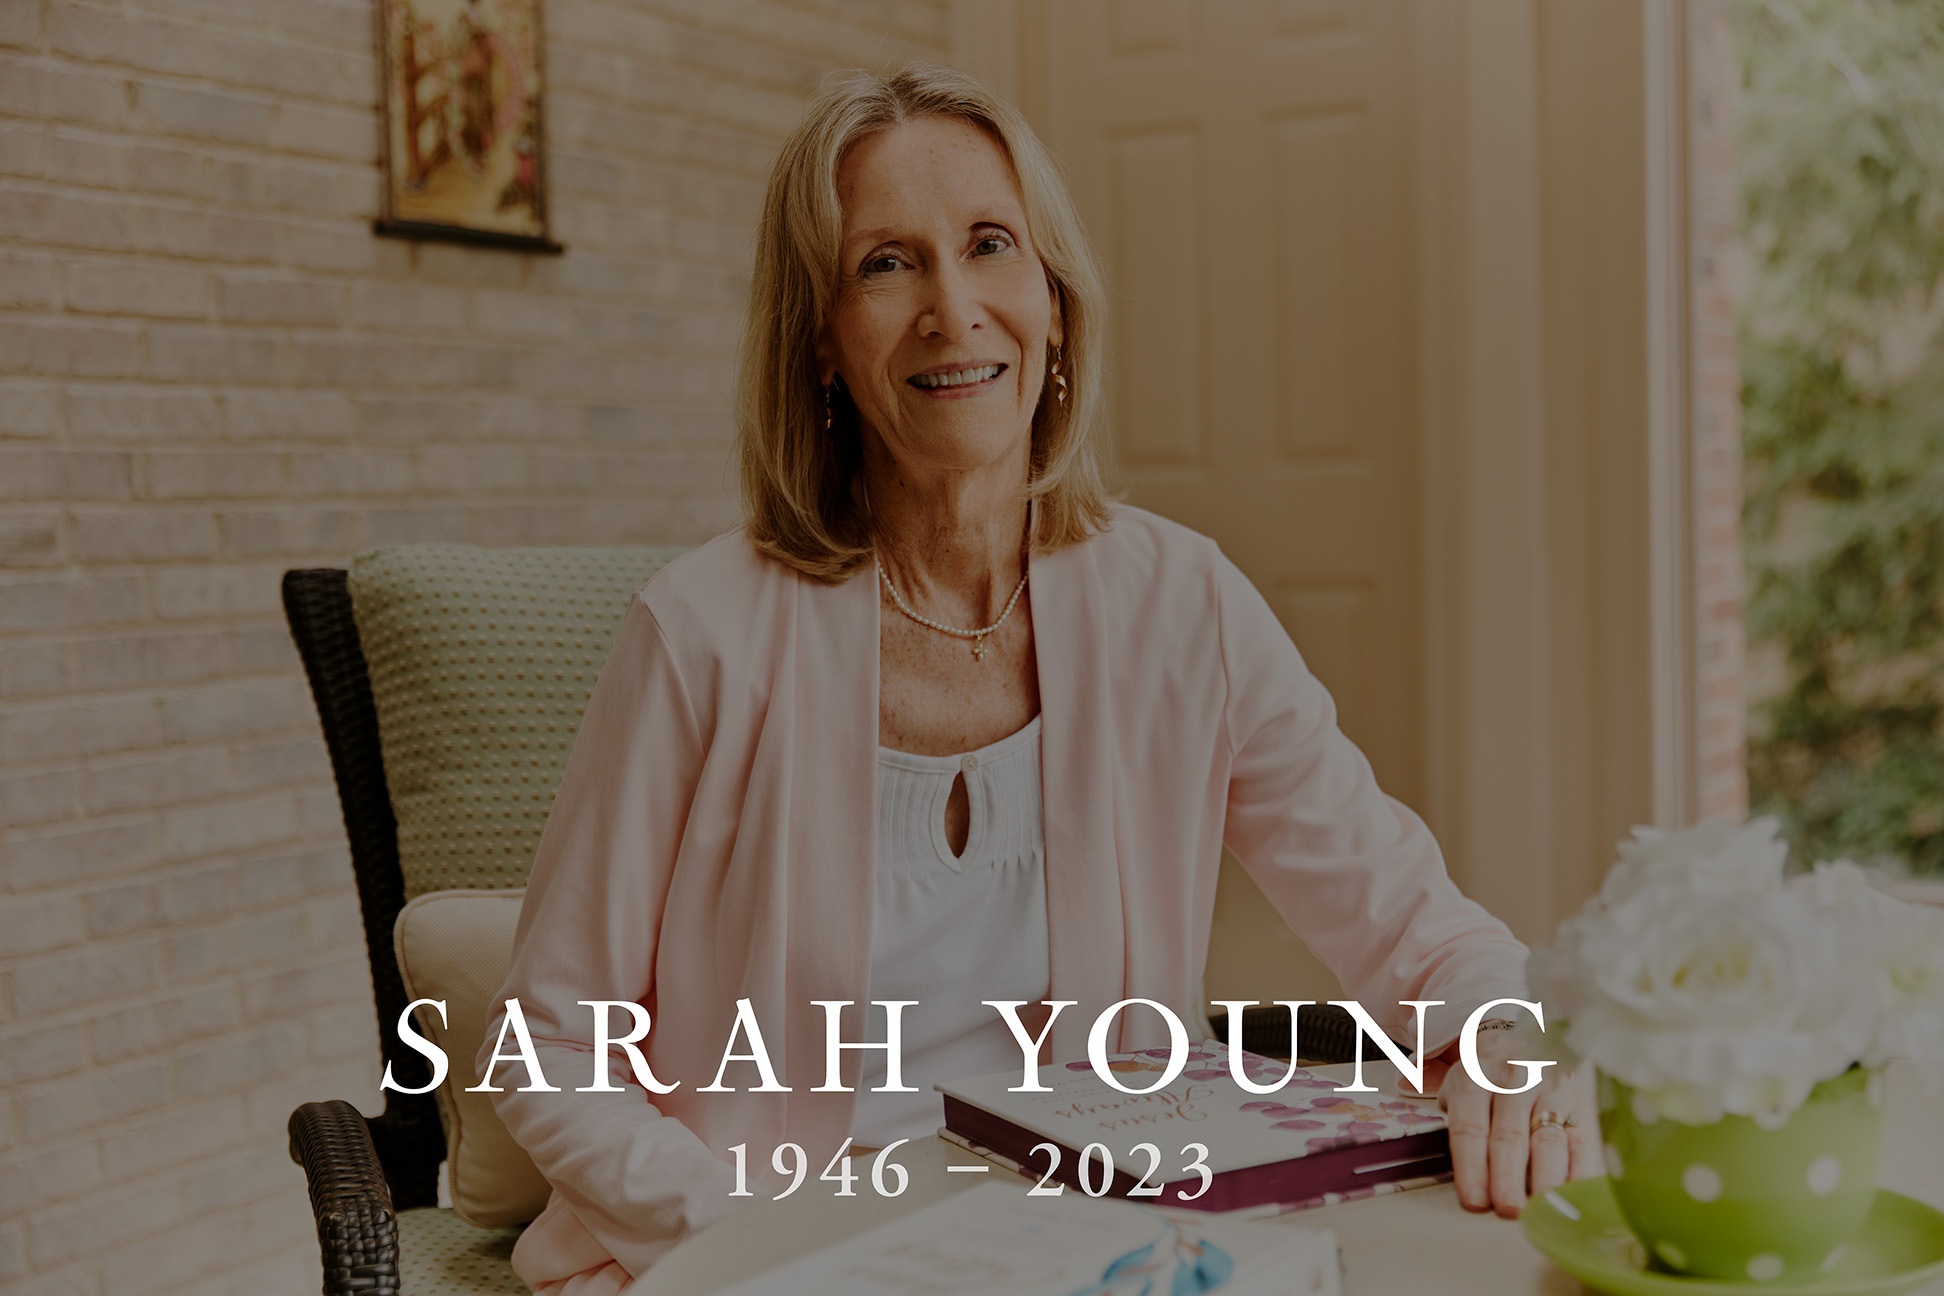 Sarah Young - Author of Jesus Calling